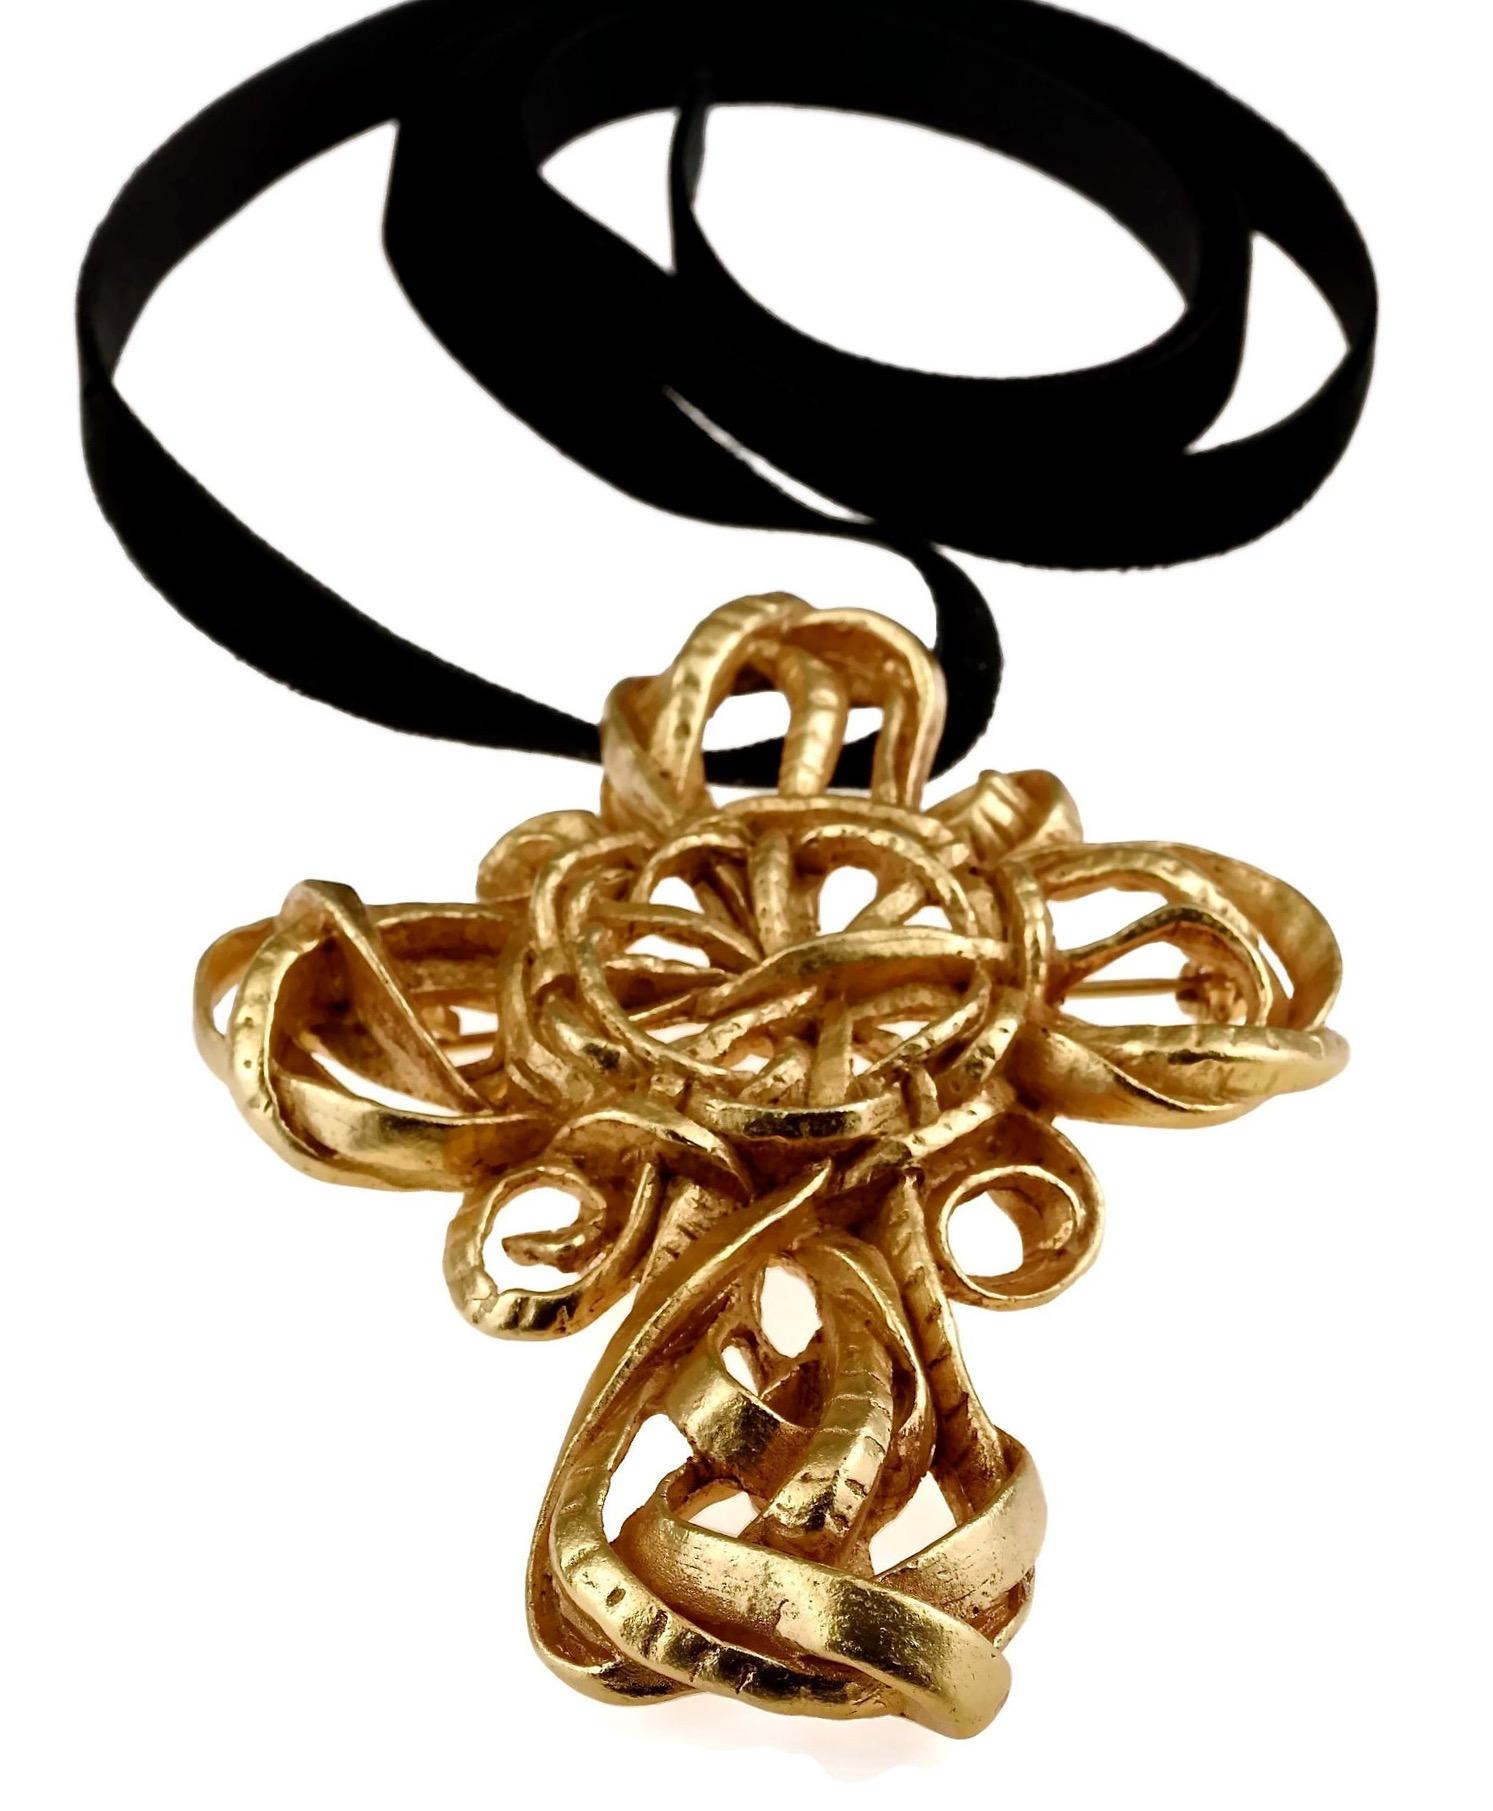 Vintage 1994 CHRISTIAN LACROIX Torsade Cross Brooch Pendant Necklace 1